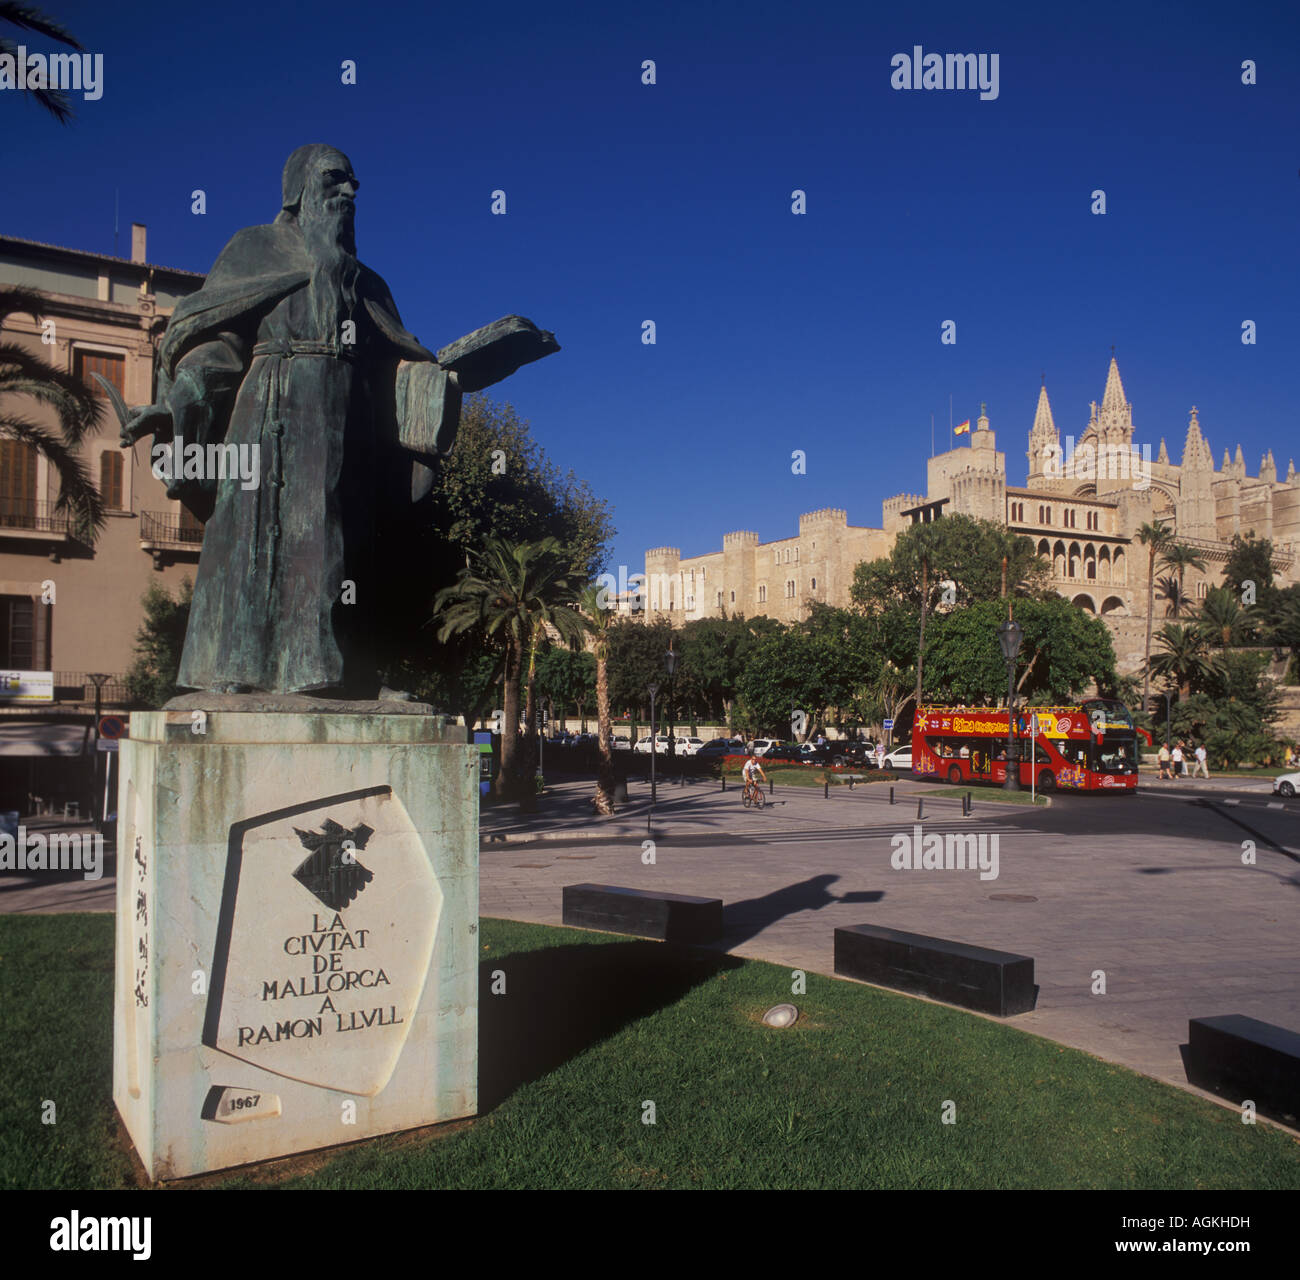 Monument to Ramon Llull scholar + Almudaina Palace, Palma de Mallorca Stock Photo